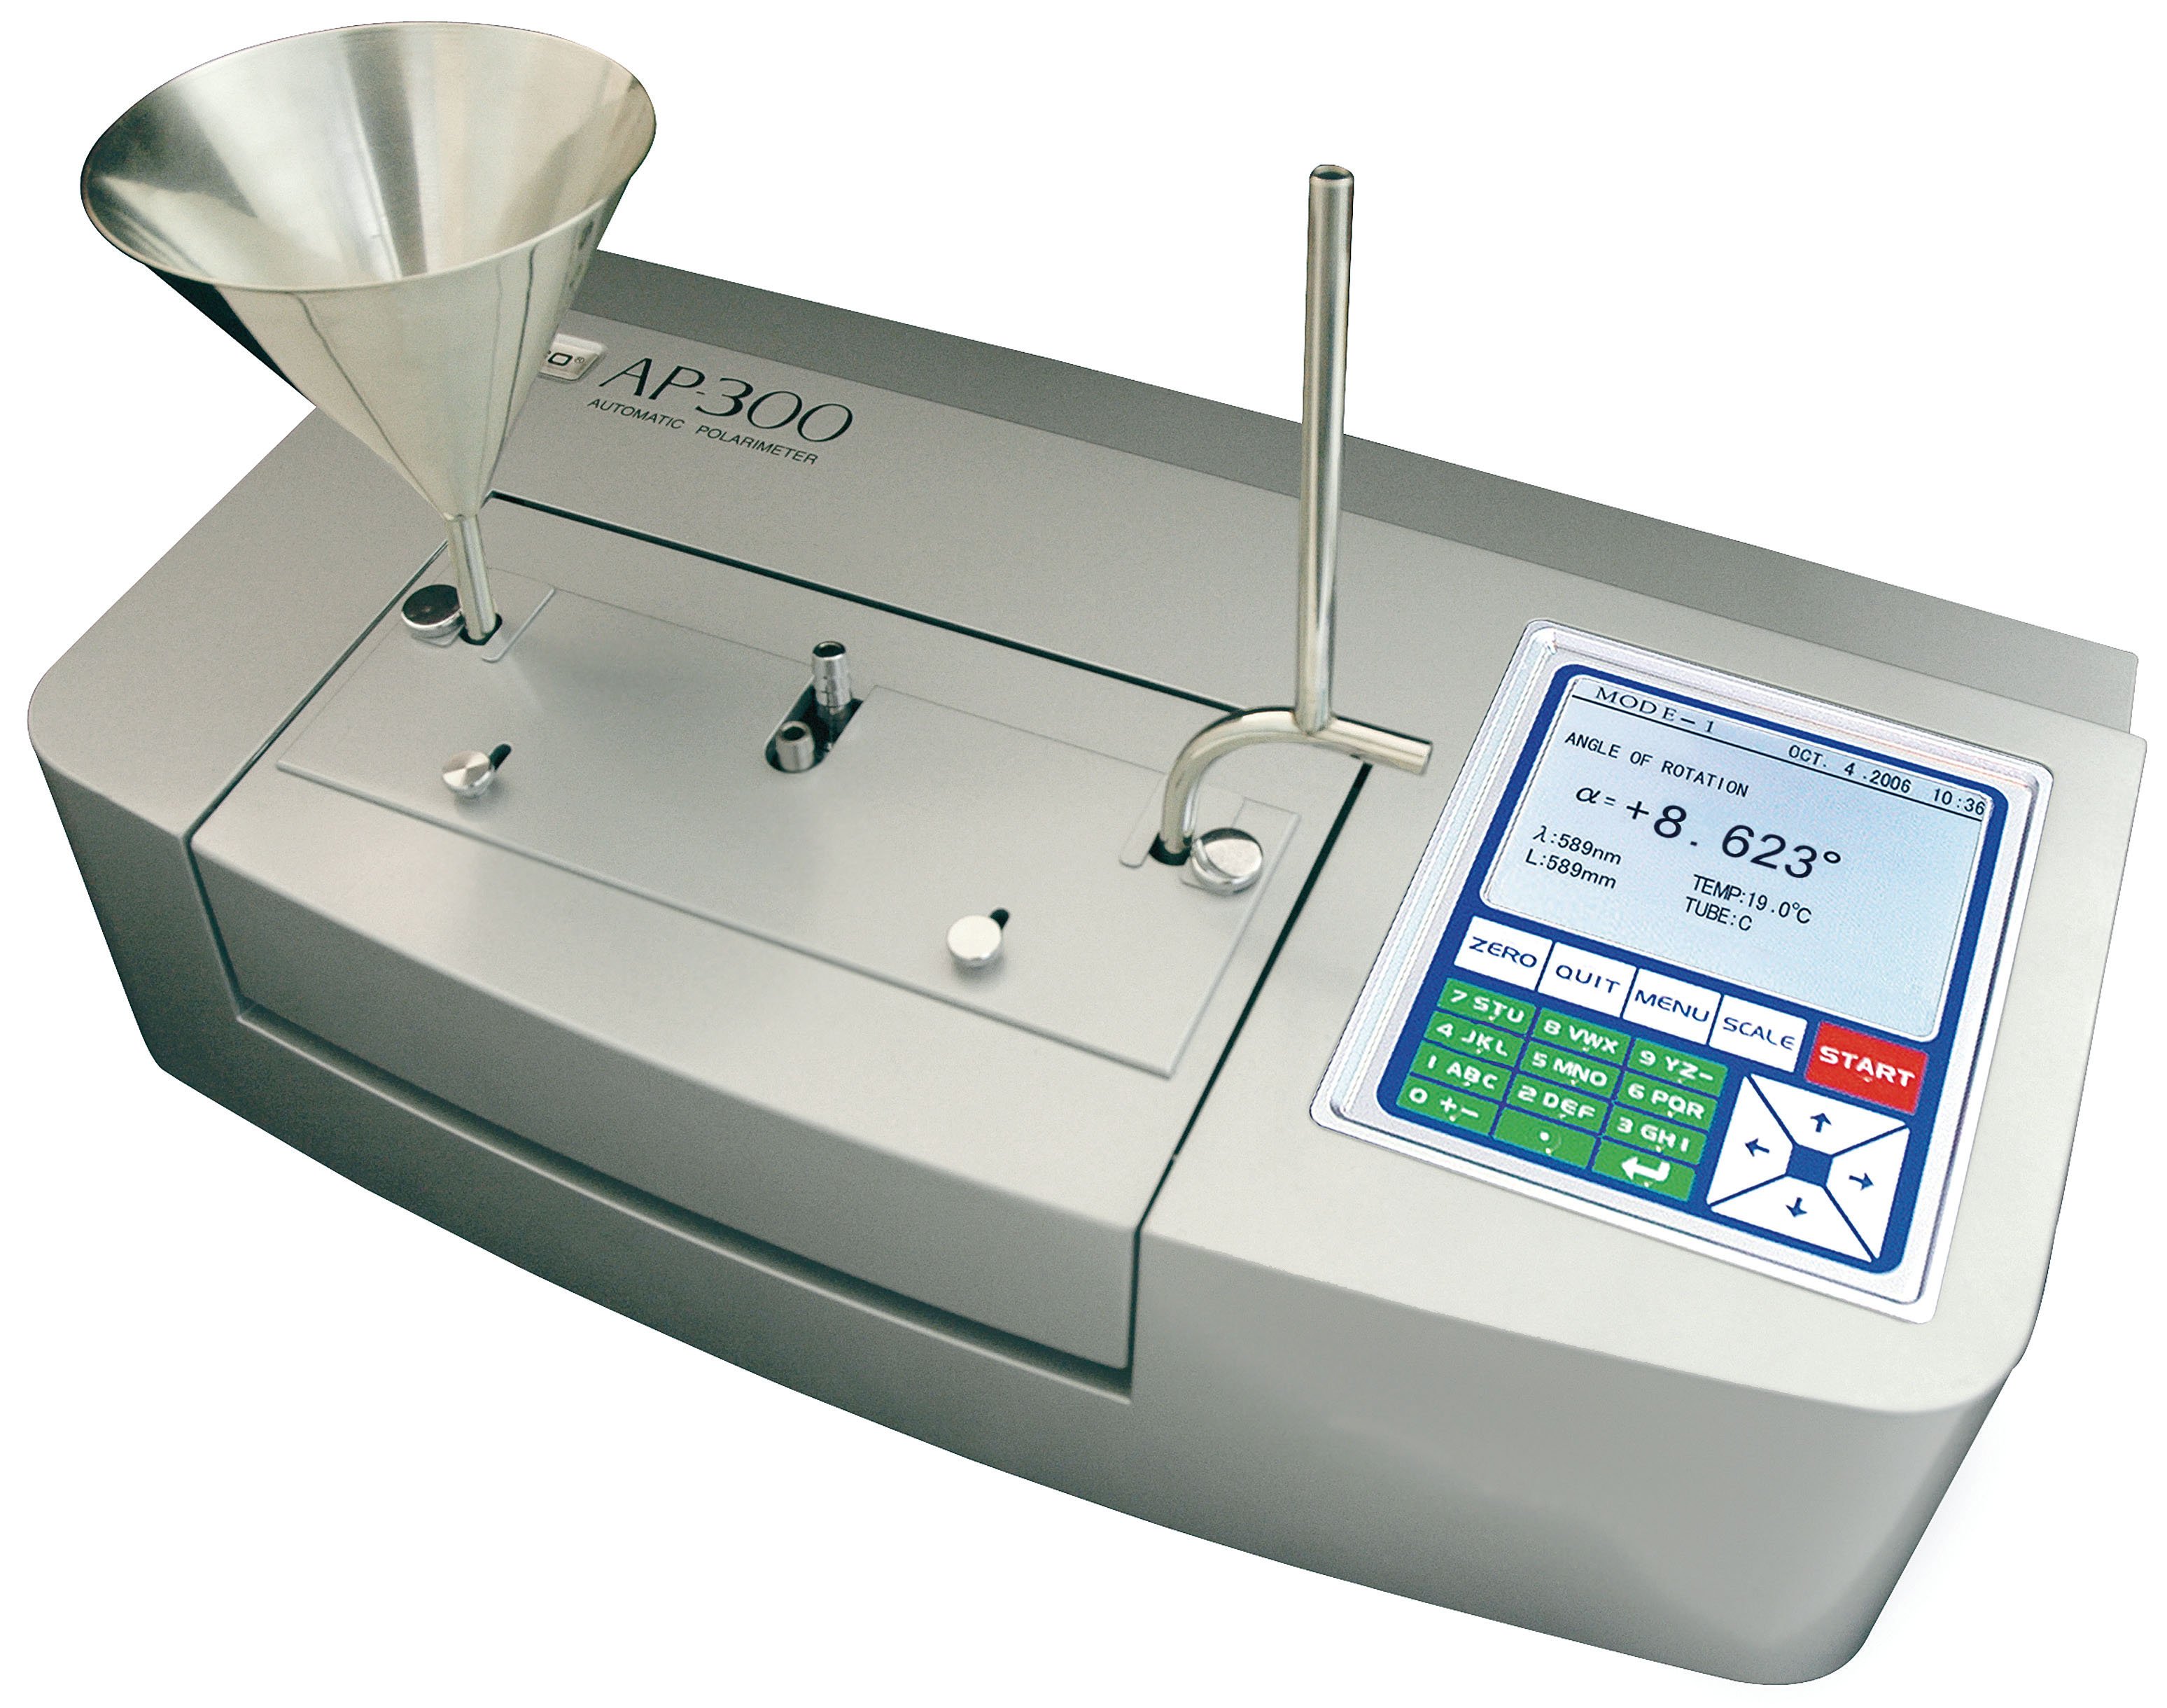 Atago 5296 AP-300 Automatic Polarimeter Saccharimeter - Type A Package - Temperature Control - For Sugar Industry